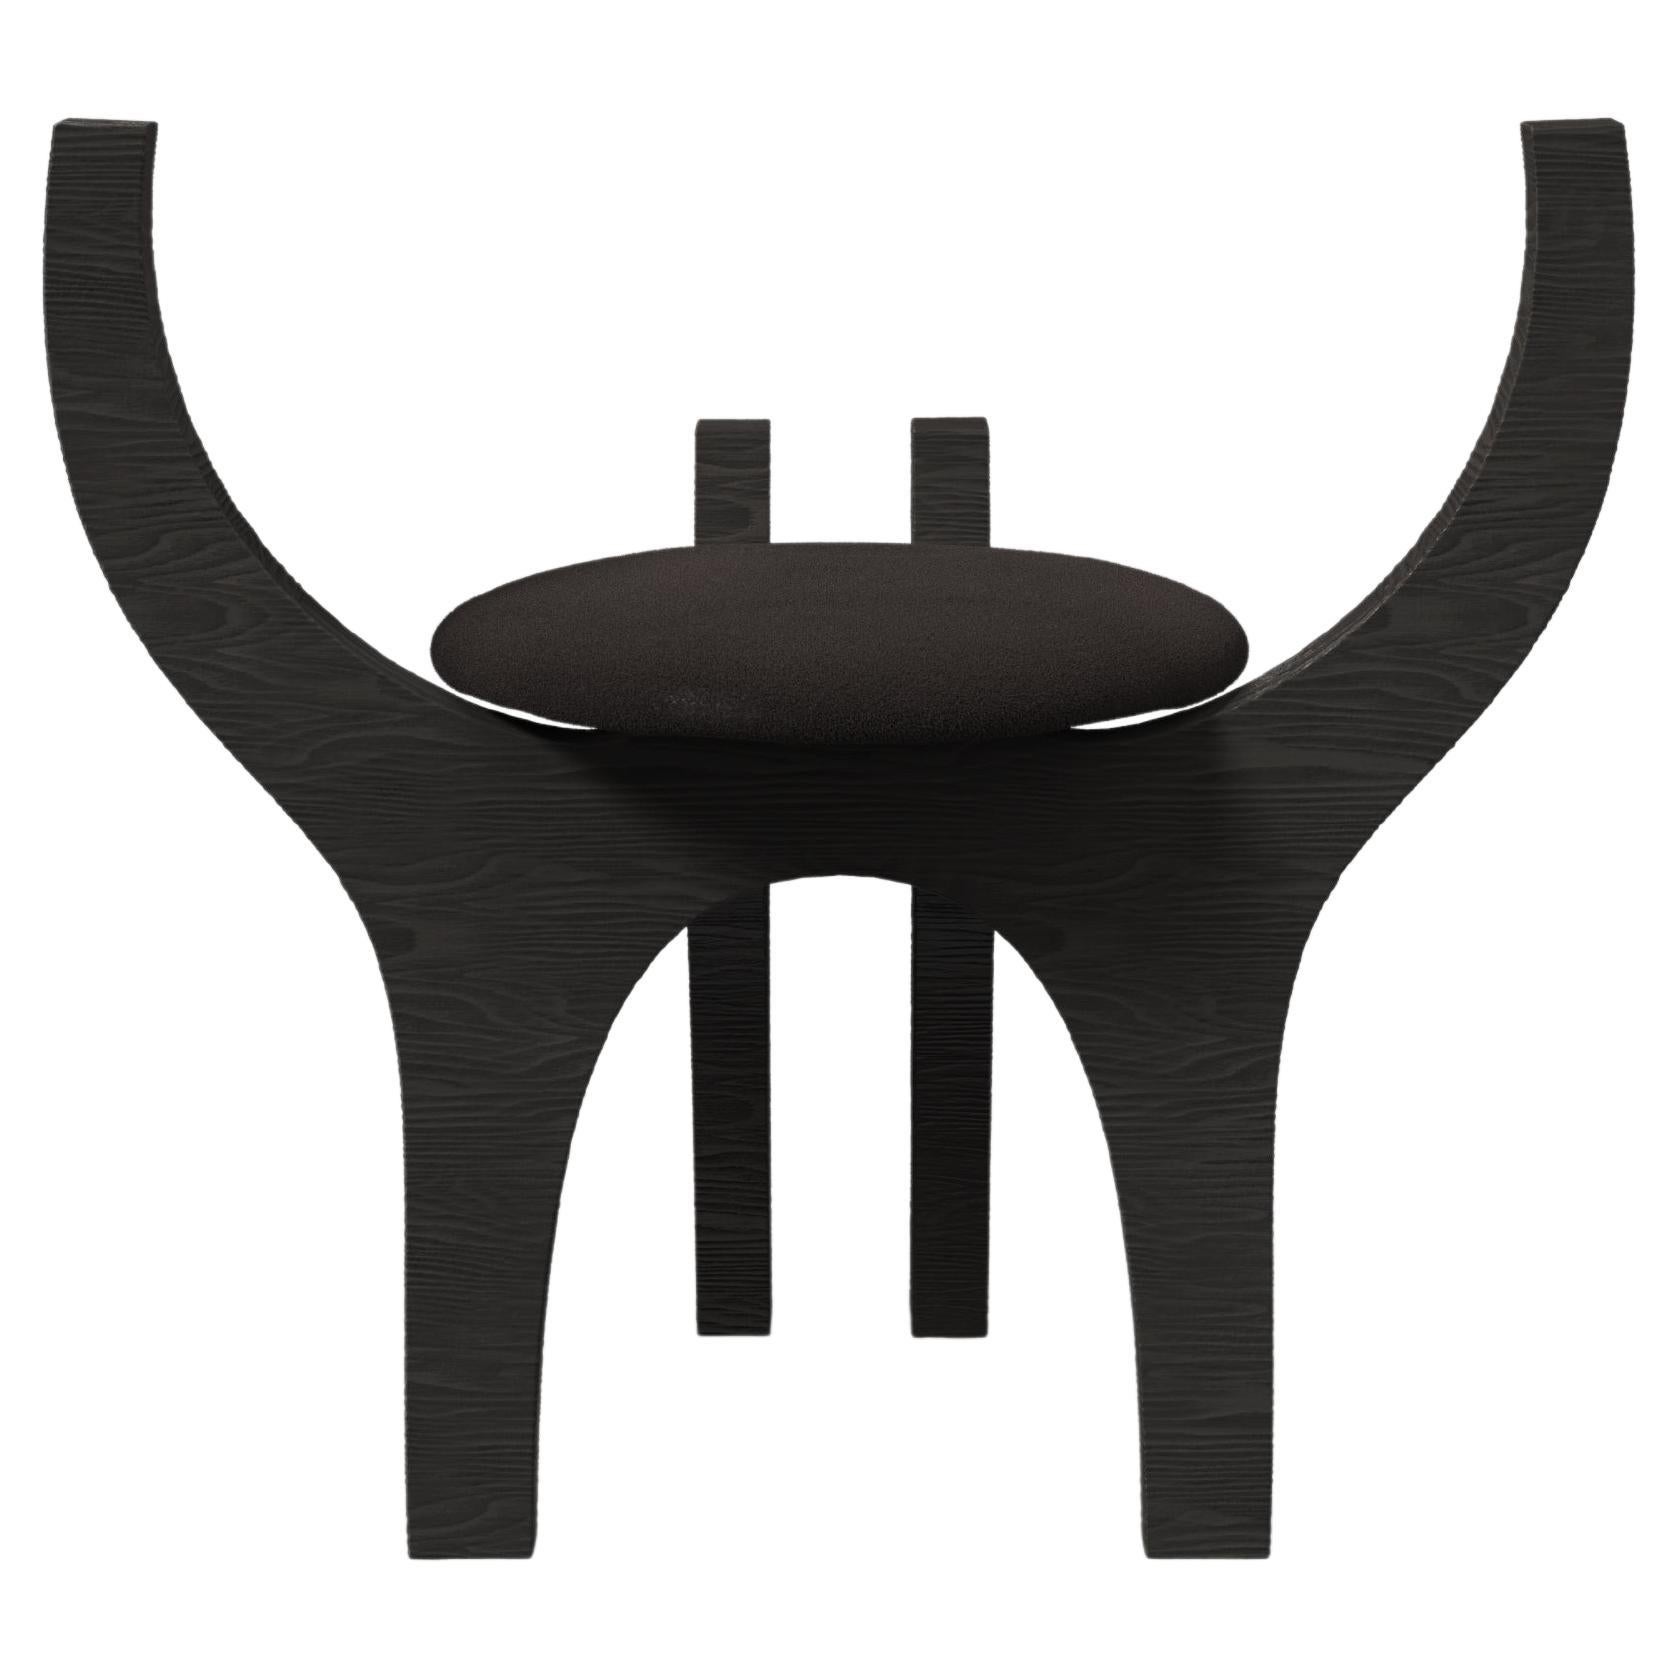 Contemporary Limited Edition Black Wood Stool, Zero V1 by Edizione Limitata For Sale